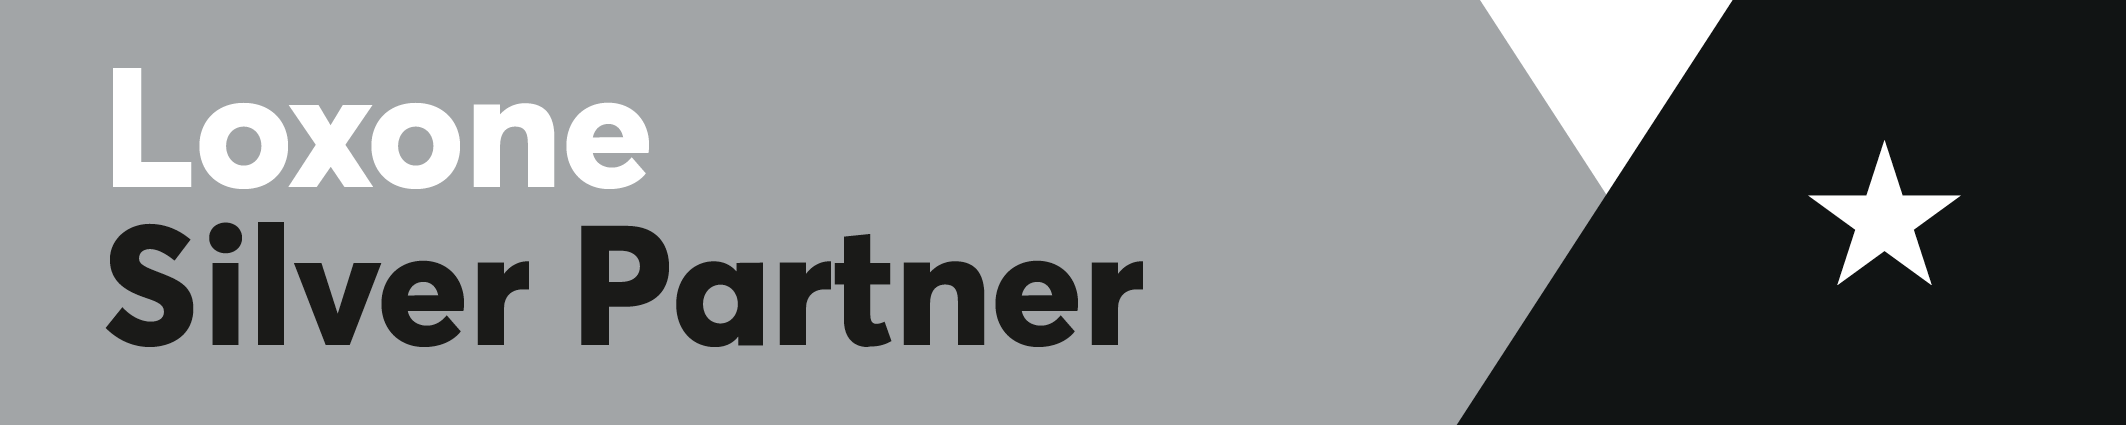 Loxone Silver Partner - banner